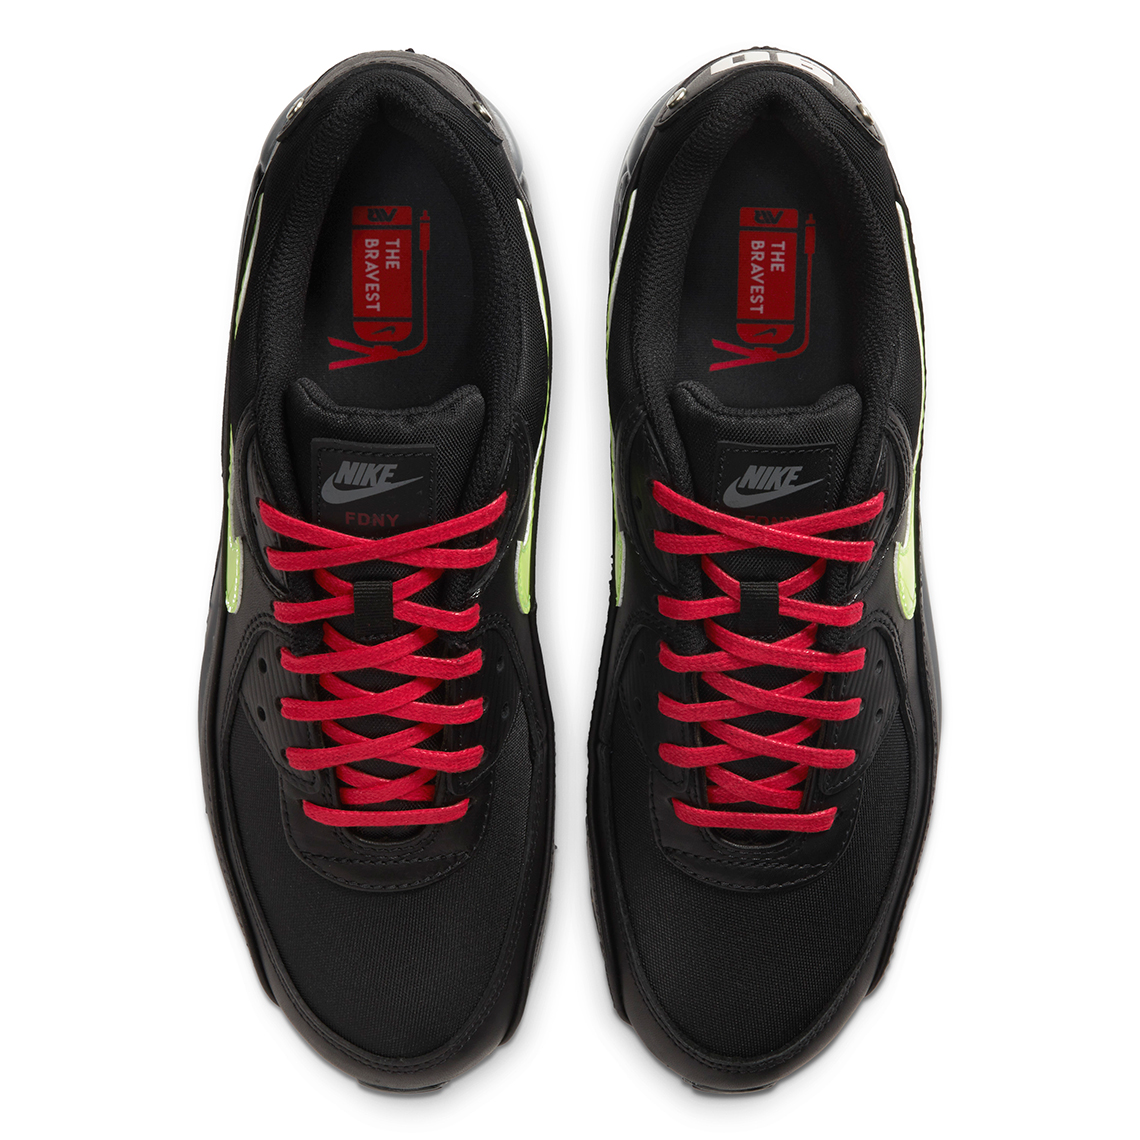 Nike Air Max 90 City Pack 2020 Release Date | SneakerNews.com